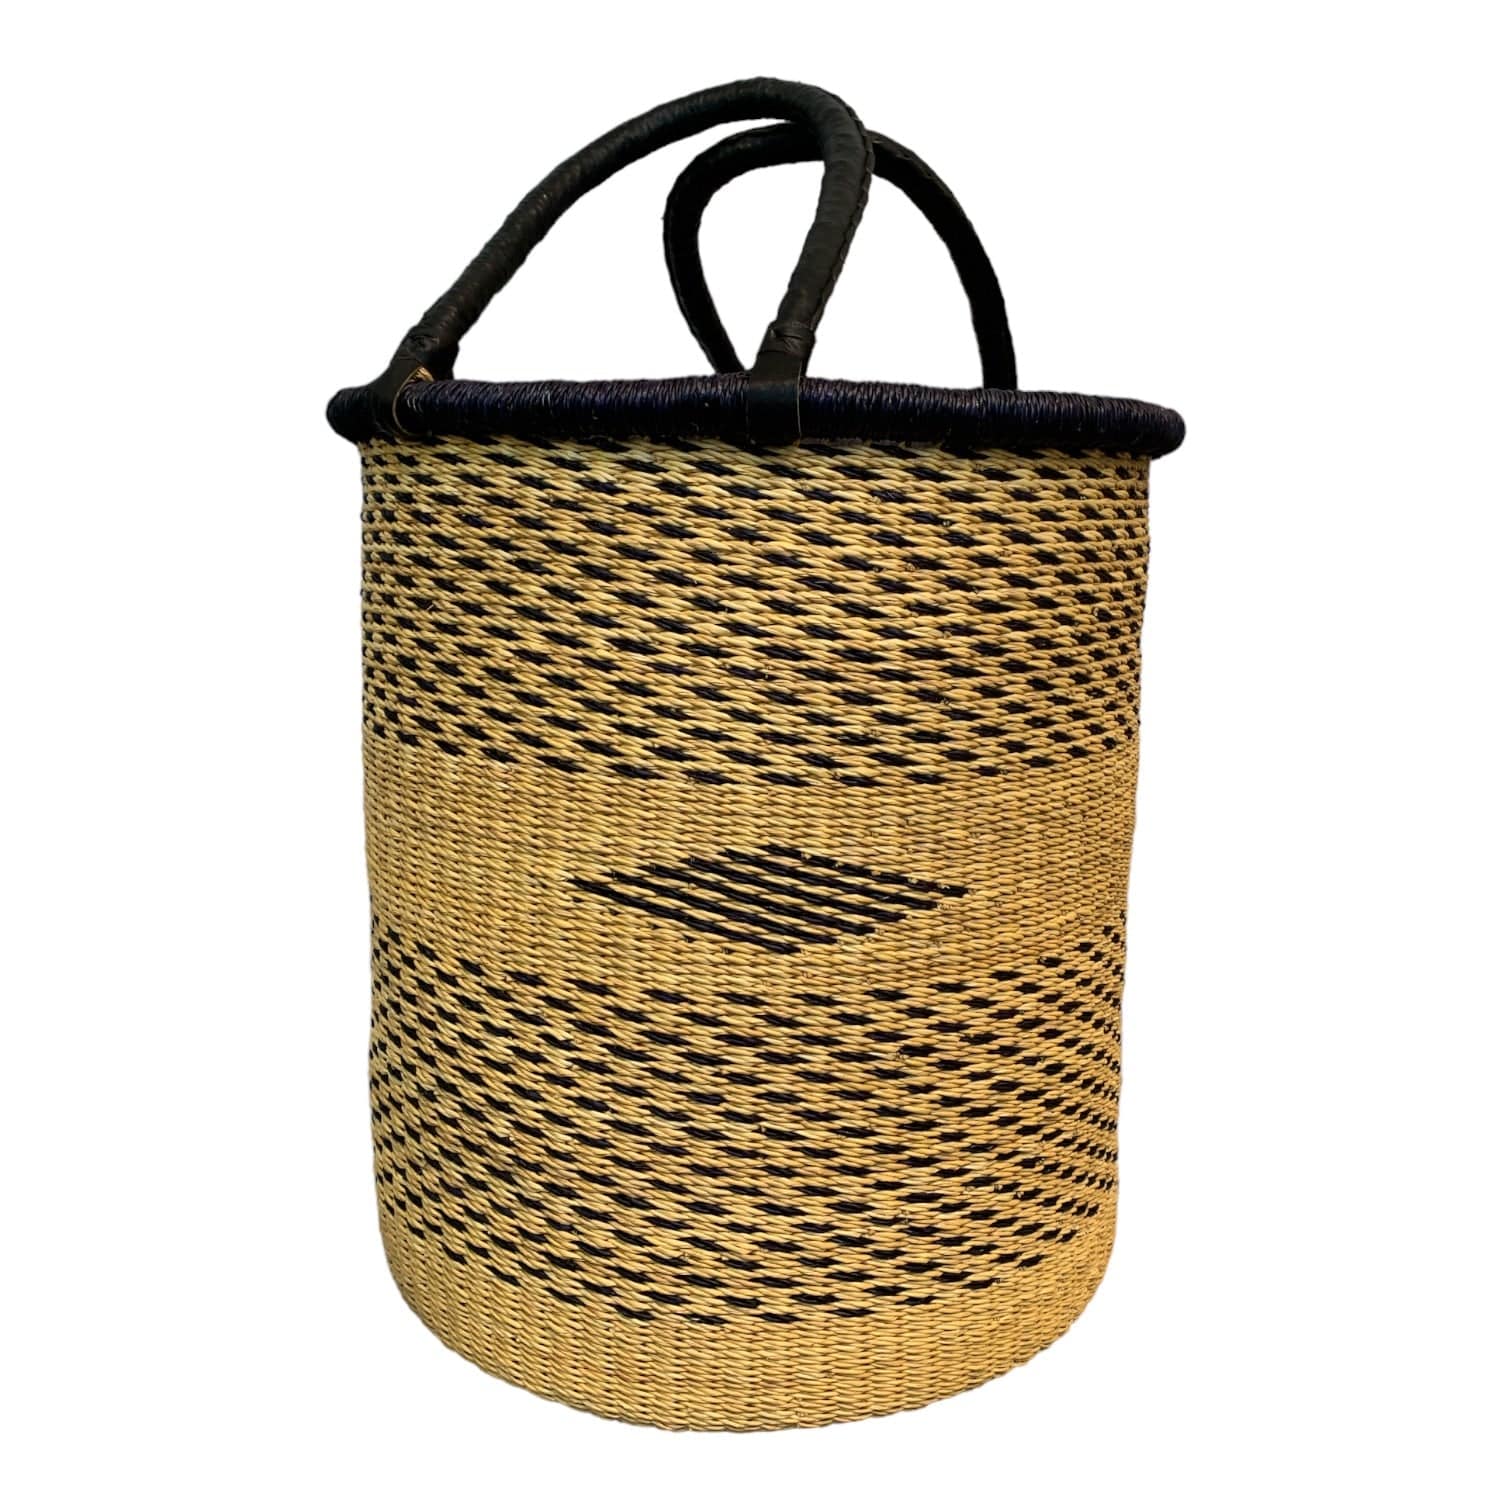 Woven Black Monochrome Large Basket